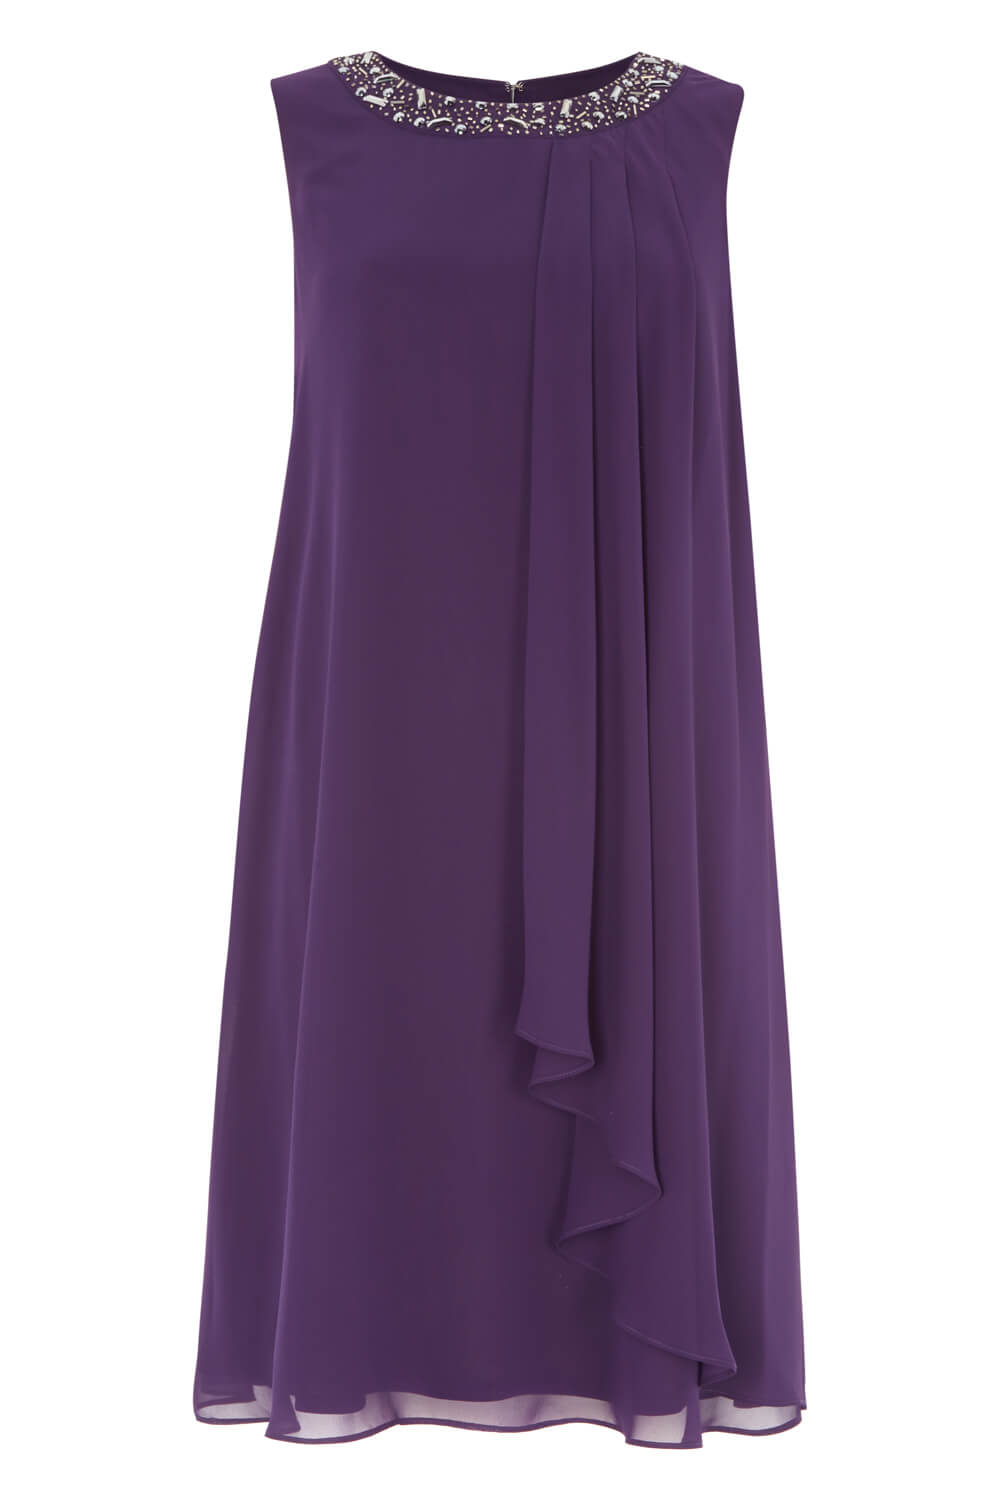 Purple Embellished Neck Chiffon Dress, Image 4 of 4